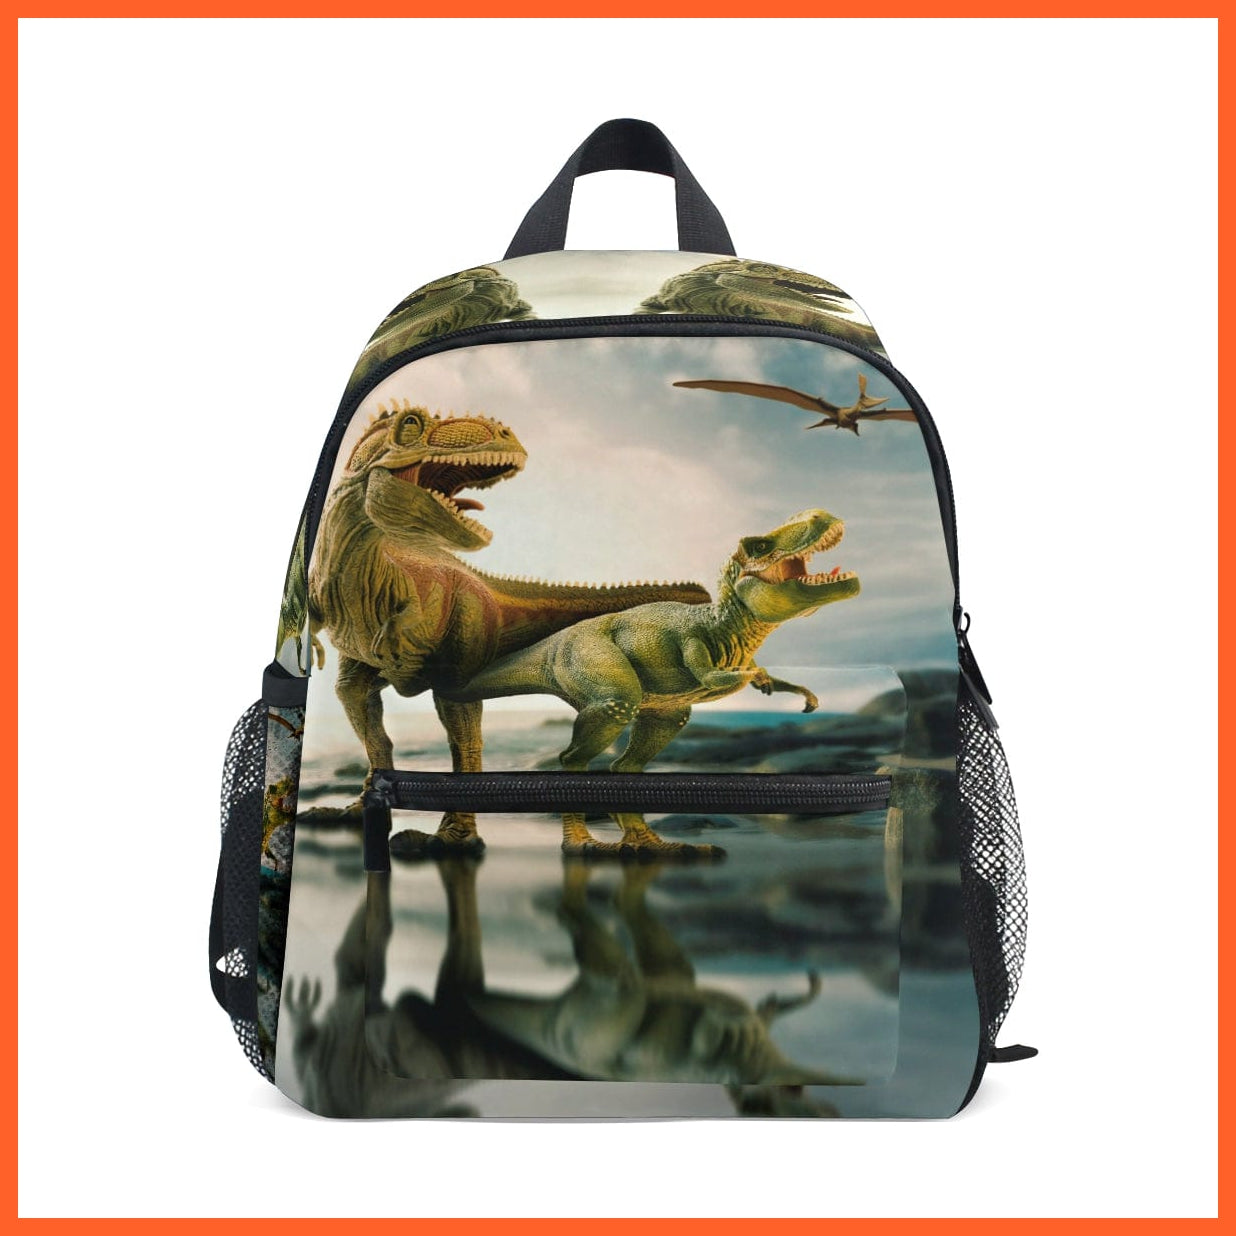 whatagift.com.au Bags & Bagpacks Dinosaur Children Backpack | Toddler Kids Kindergarten Preschool Cartoon Bags